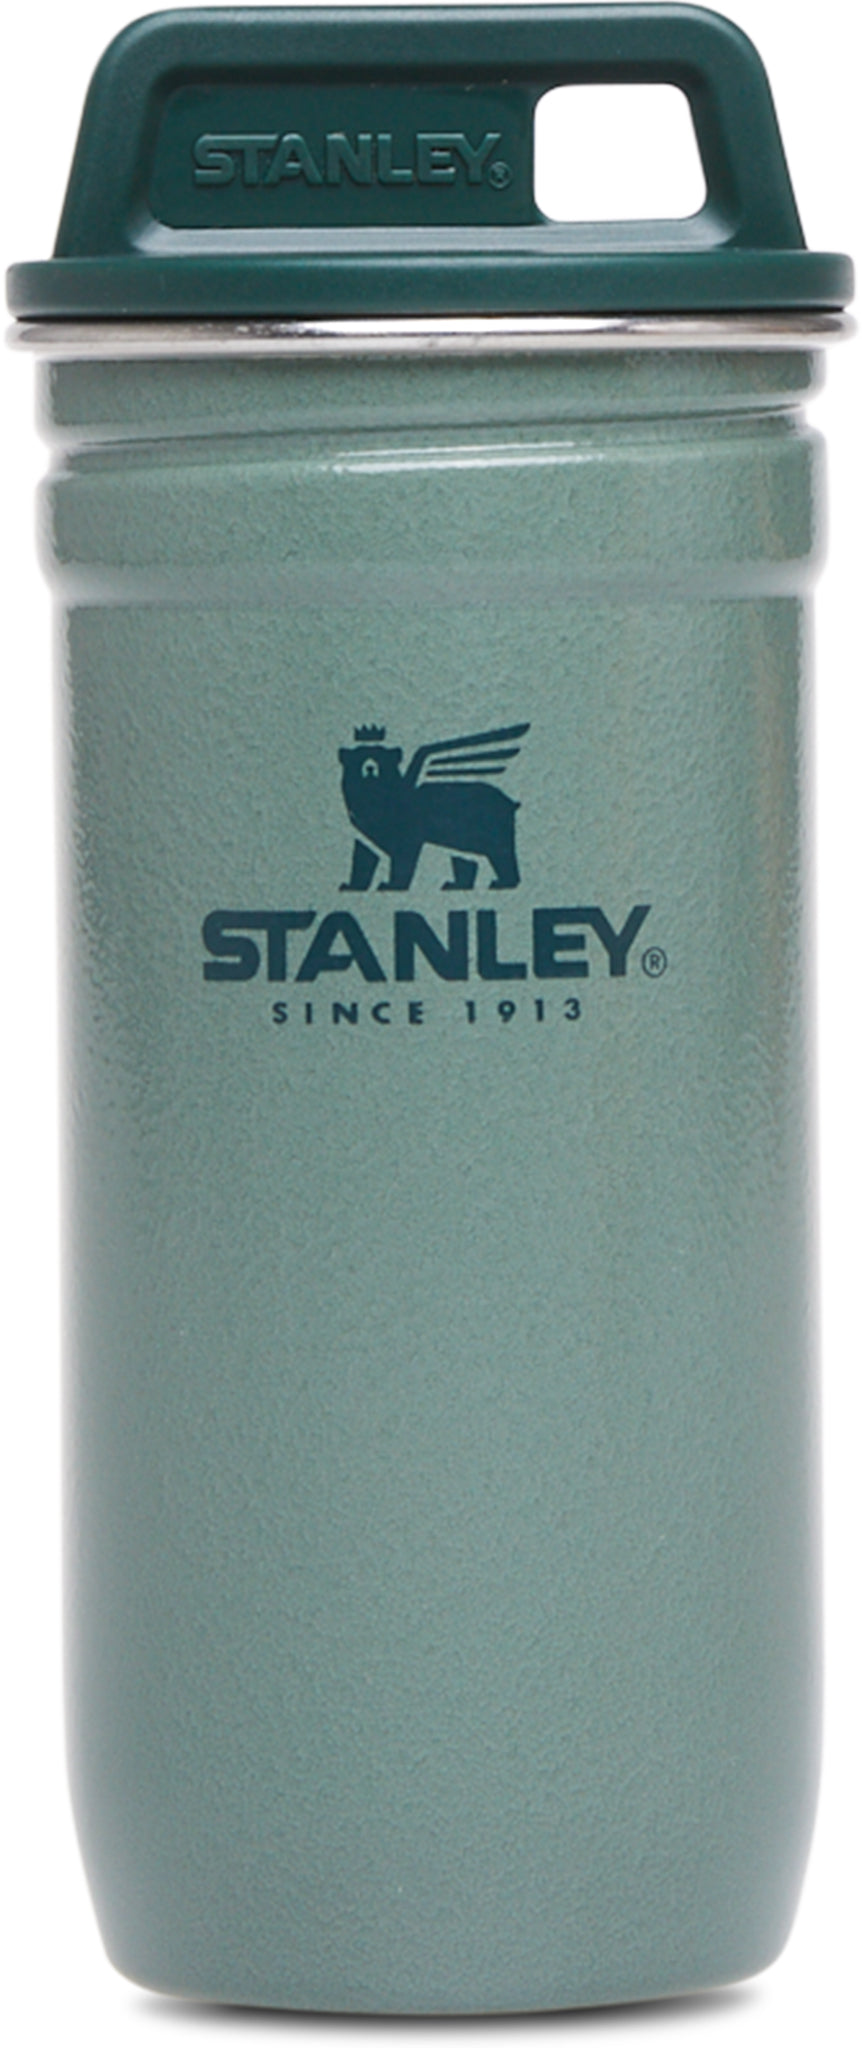 Stanley / The Nesting Shot Glass Set